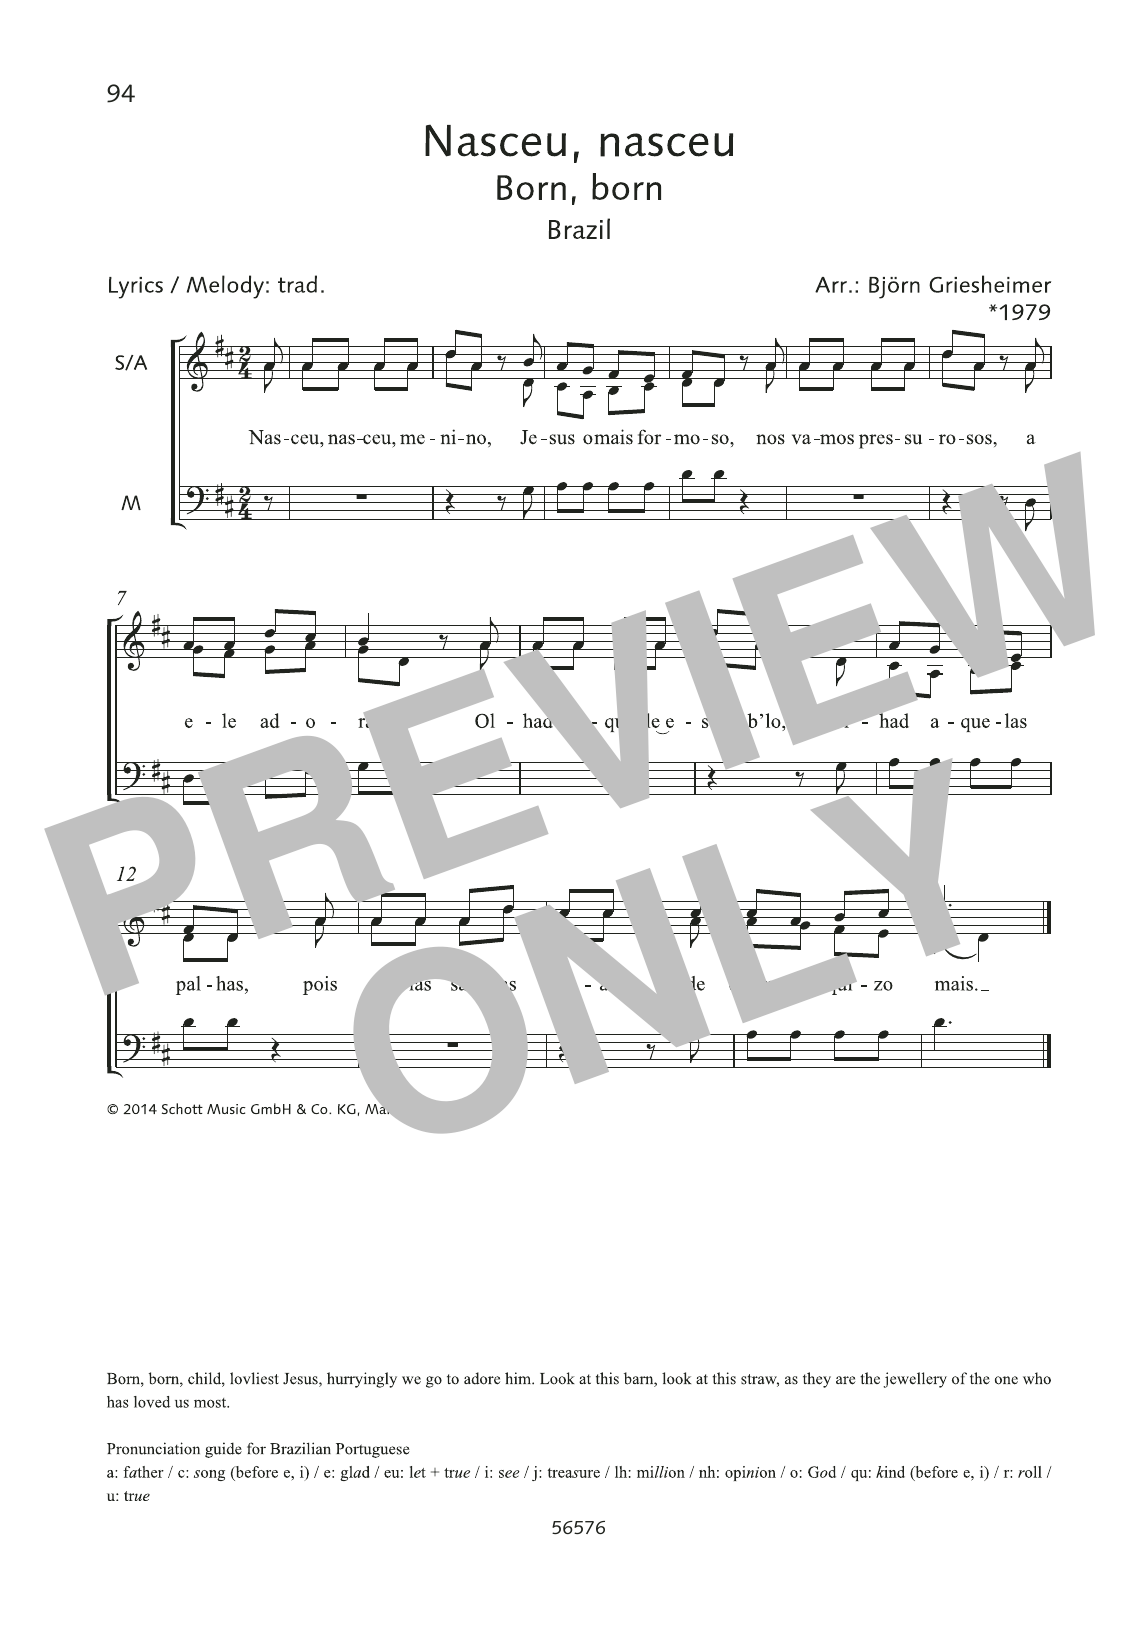 Download Björn Griesheimer Nasceu, nasceu Sheet Music and learn how to play Choir PDF digital score in minutes